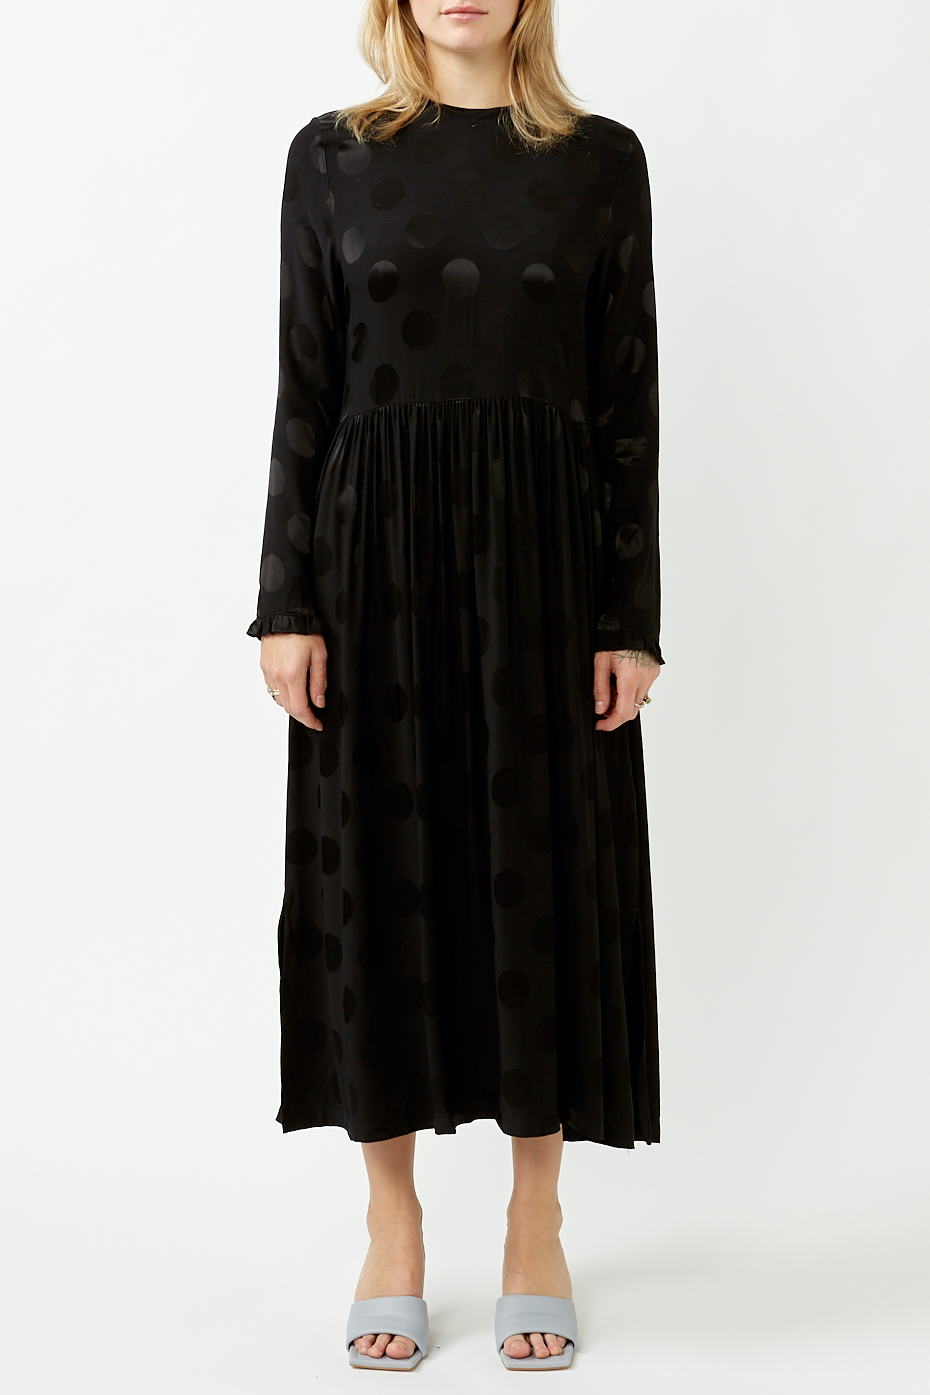 mads-norgaard-black-gran-jacquard-docca-dress